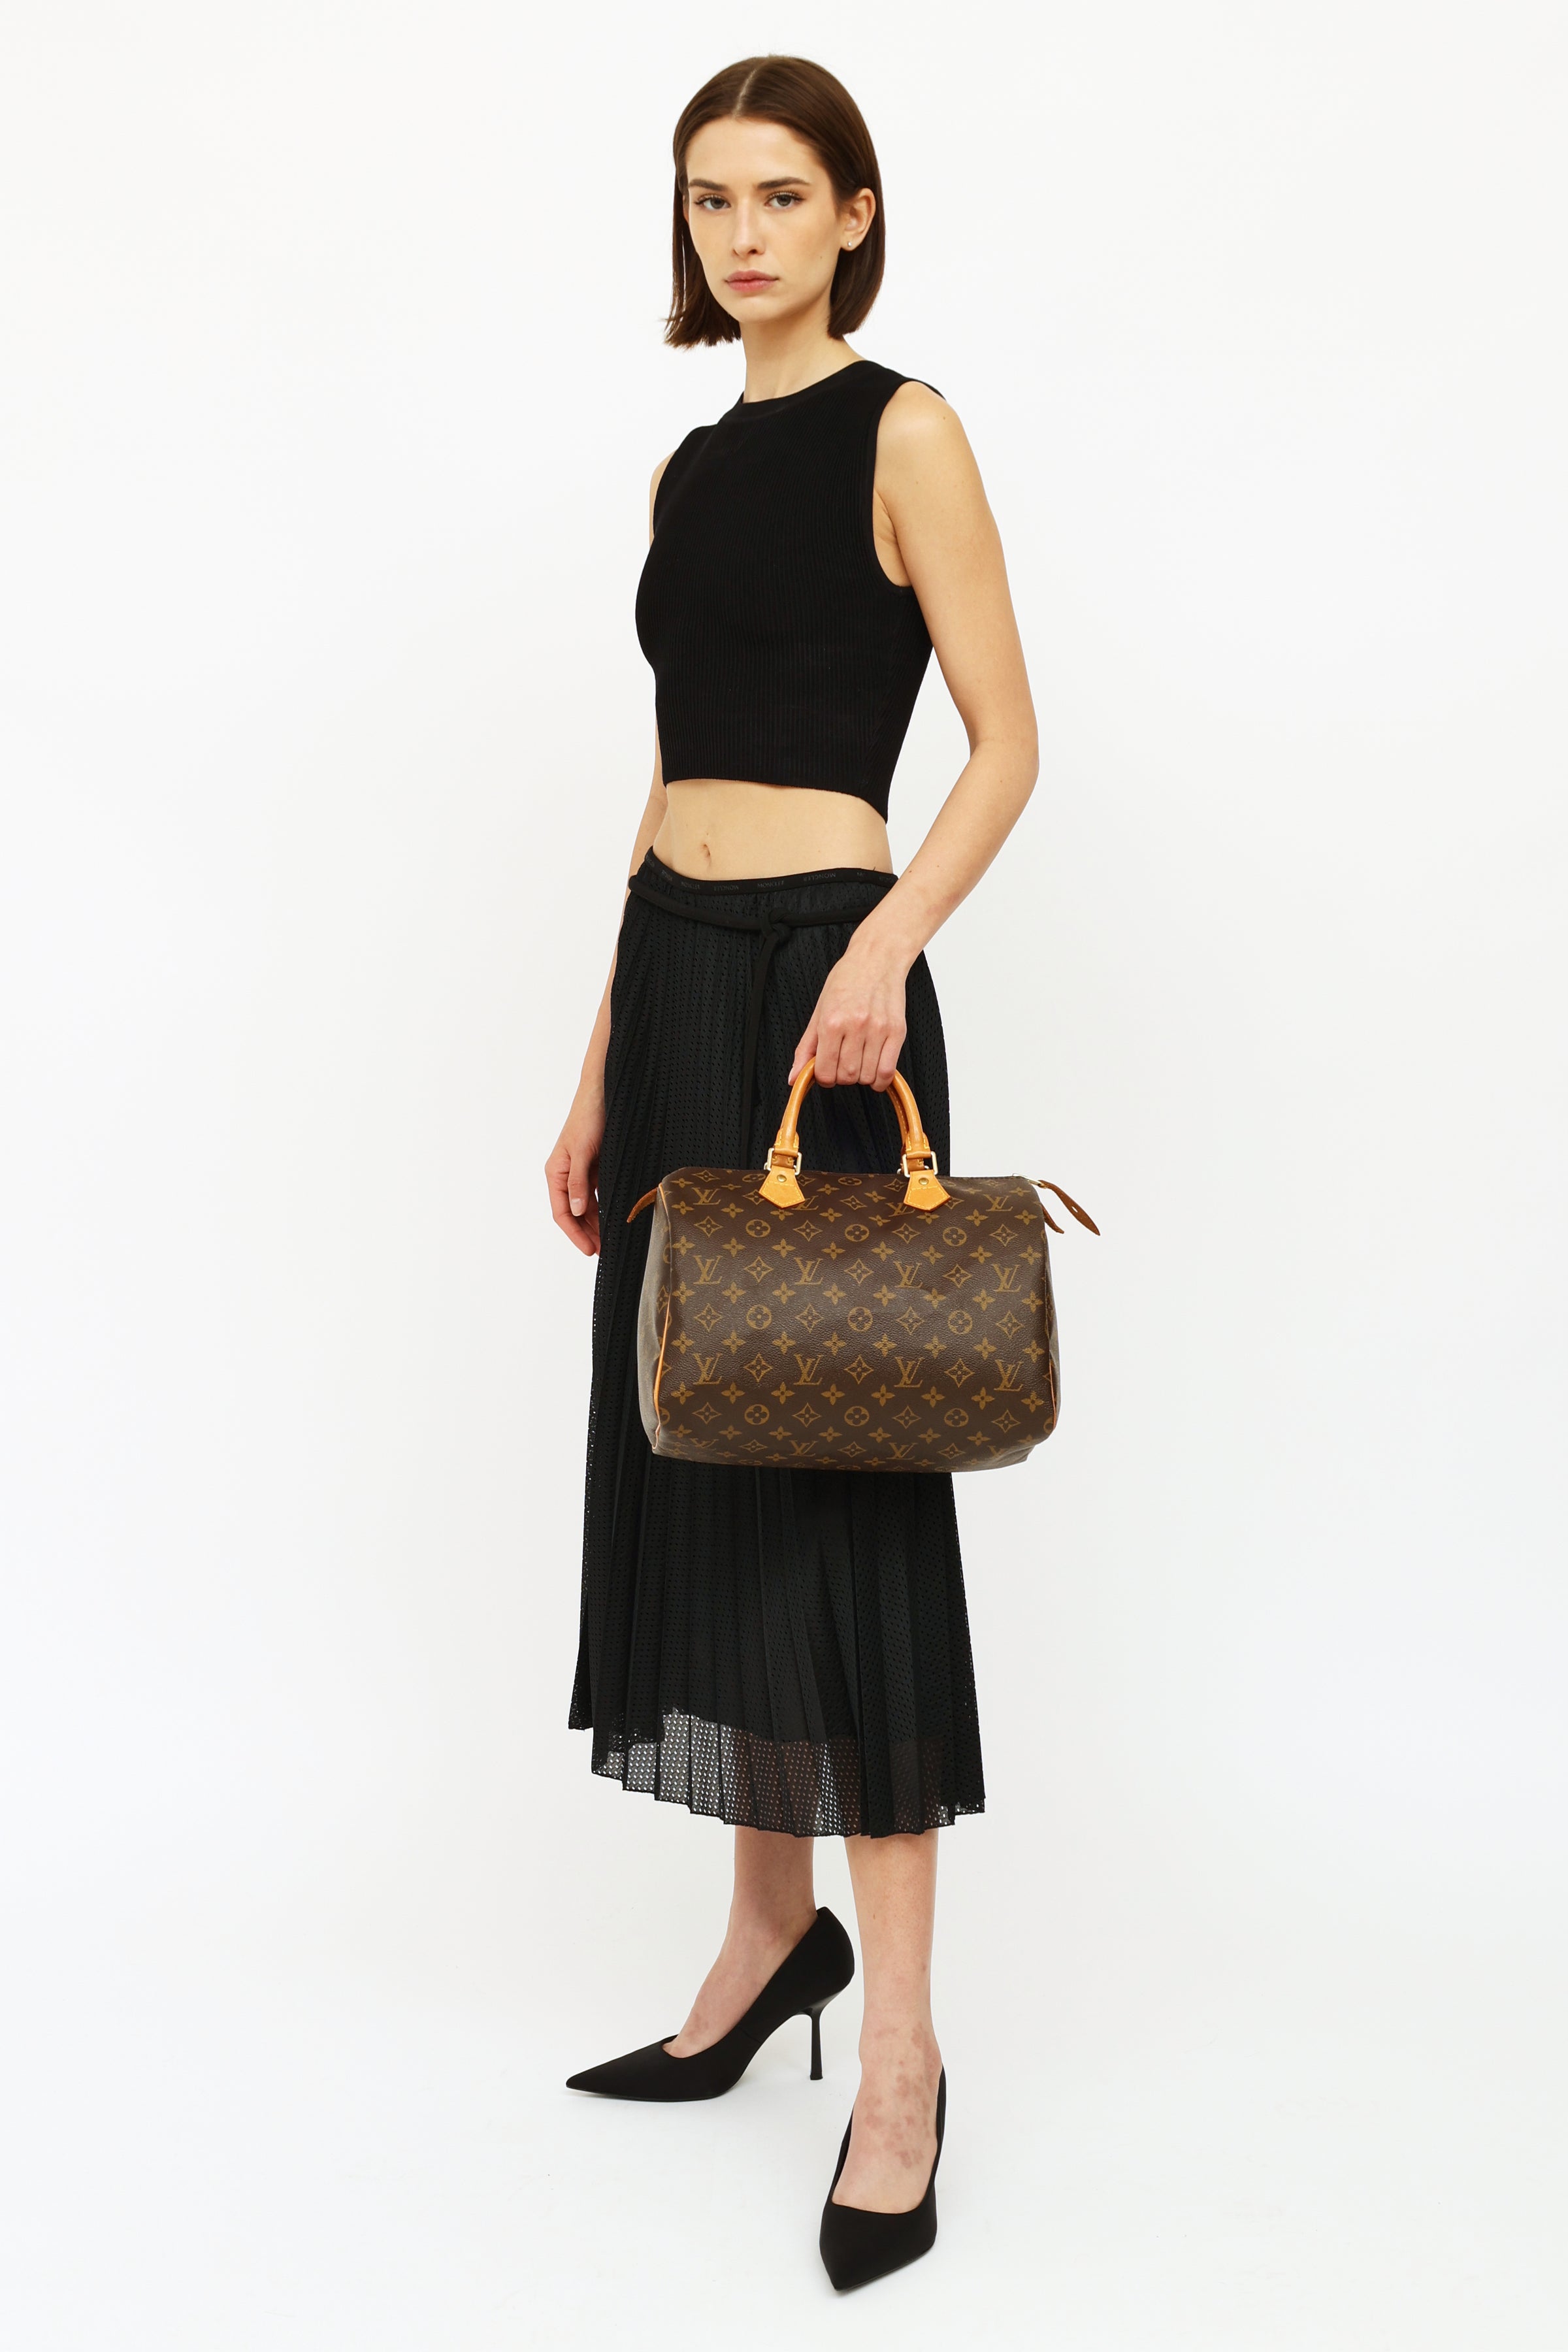 Louis Vuitton Speedy Shoulder bag 368133